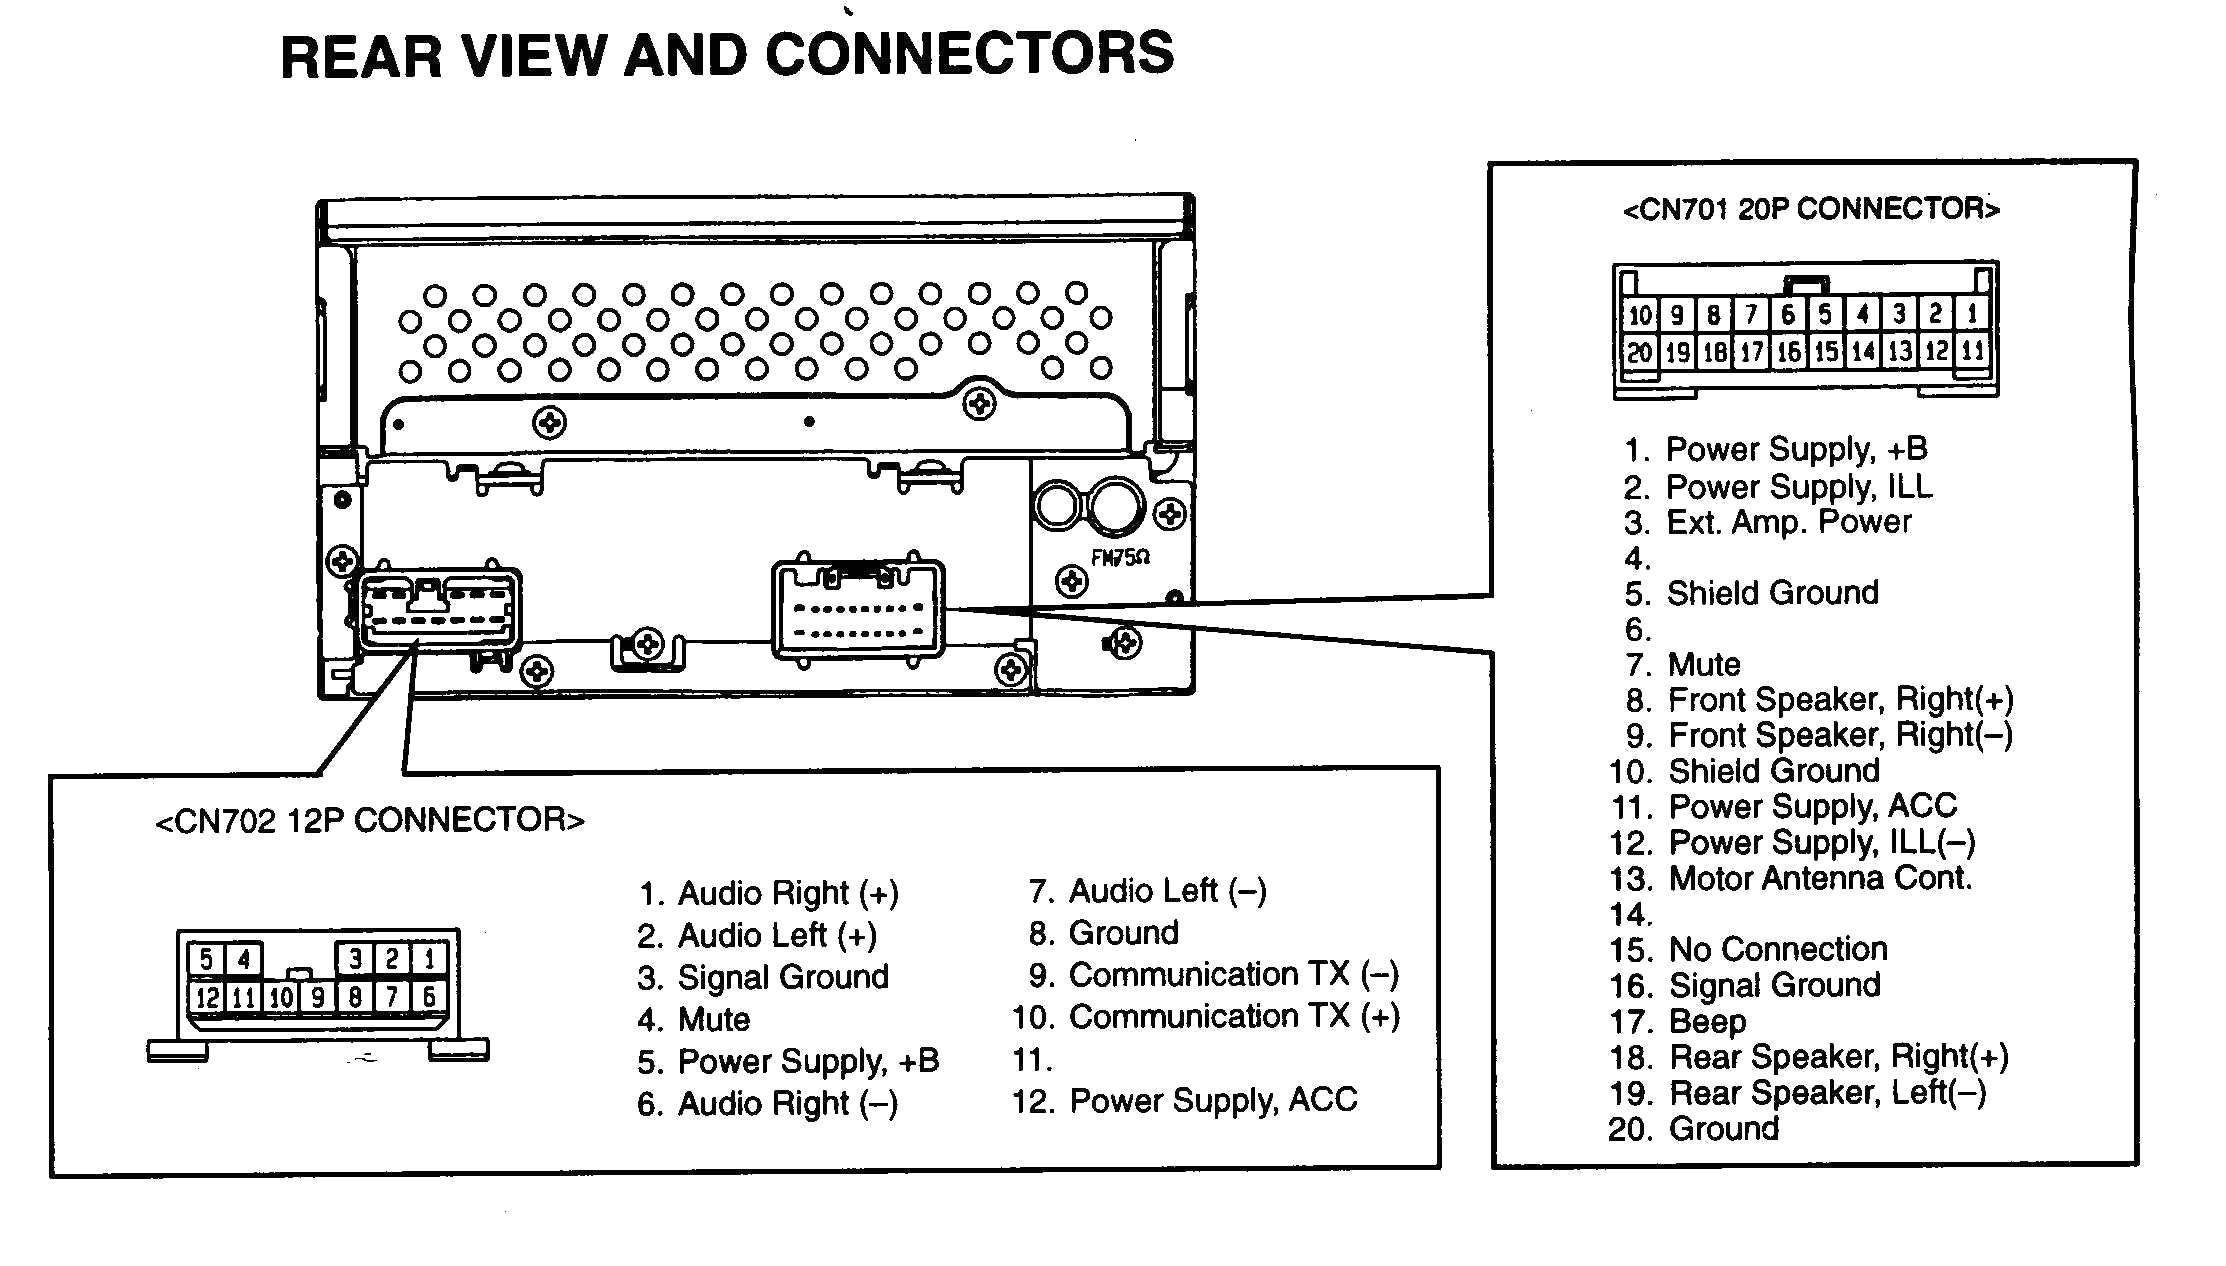 2005 toyota corolla radio wiring diagram best of best 2006 toyota corolla stereo wiring diagram simple radio 2017 of 2005 toyota corolla radio wiring diagram jpg